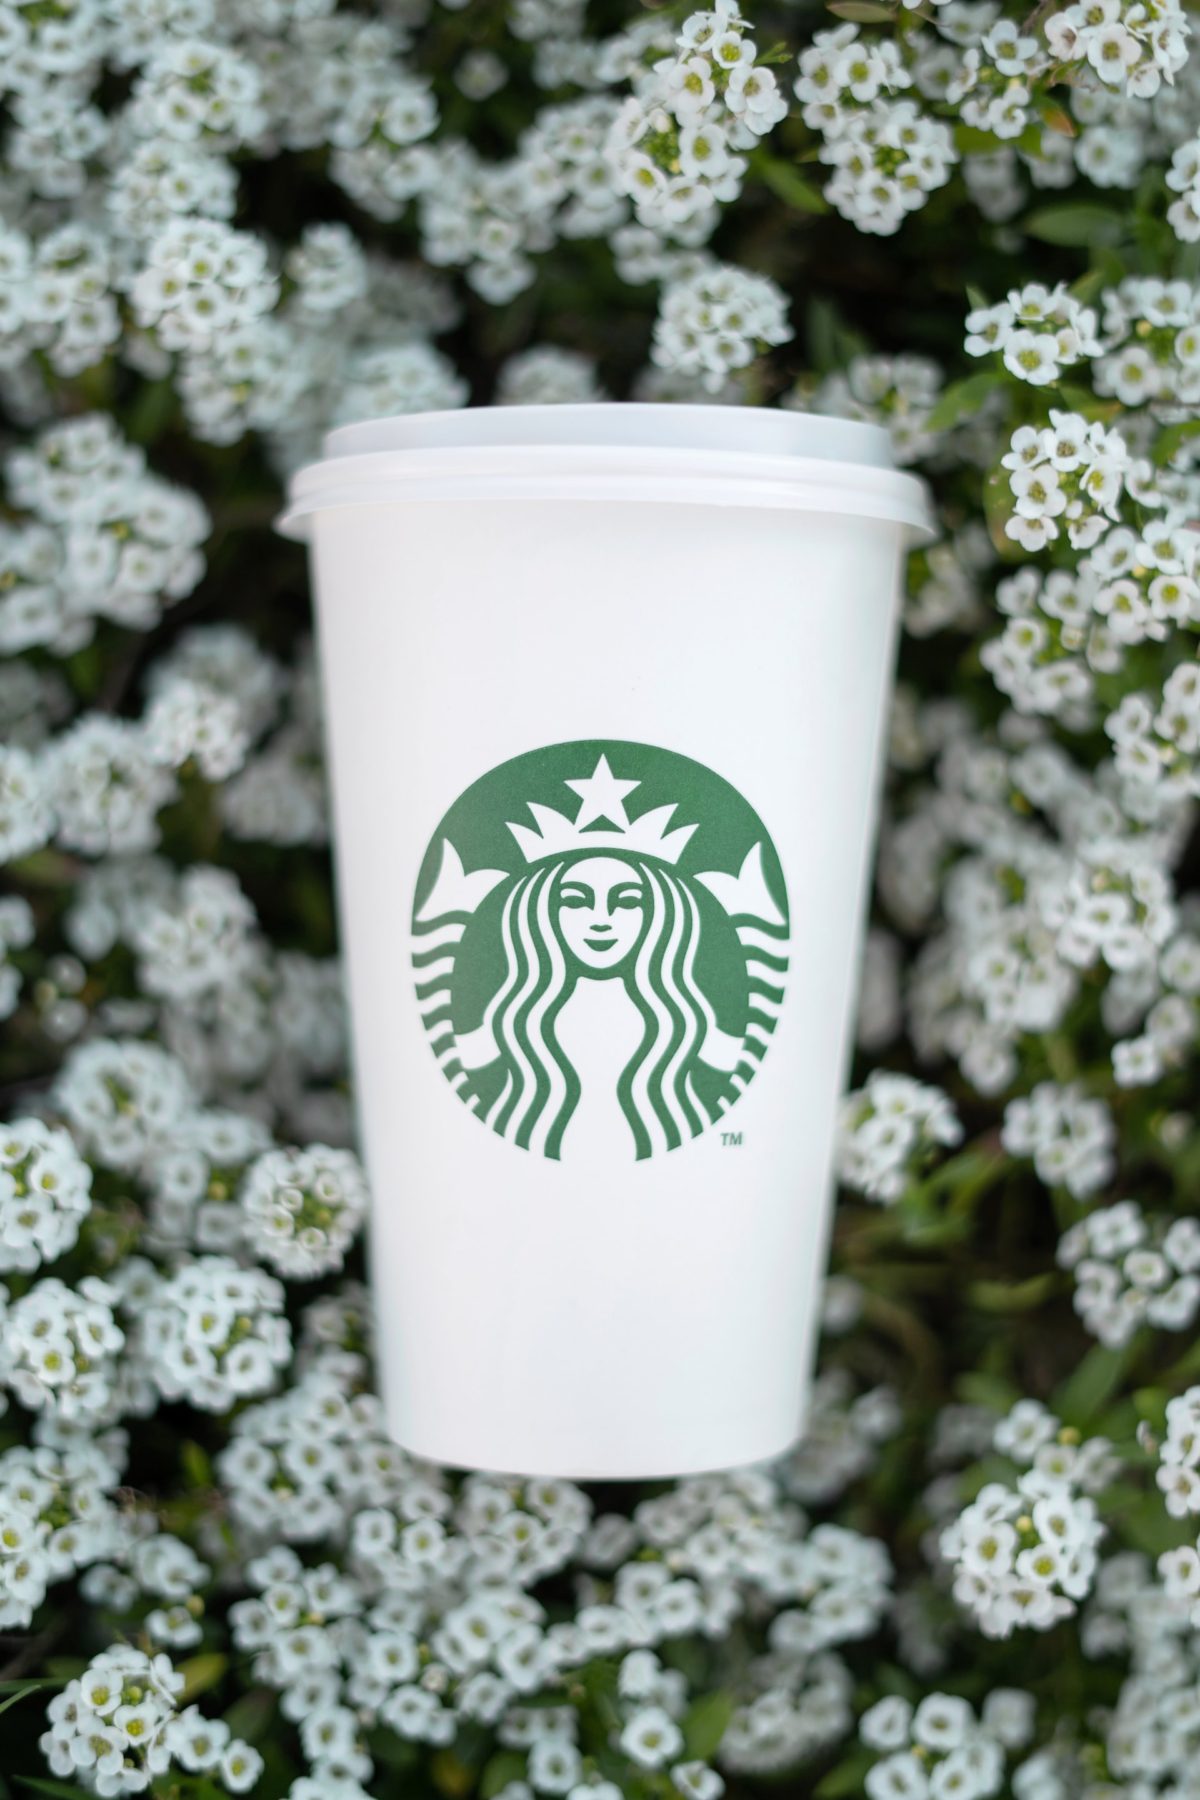 Starbucks’ product branding strategy